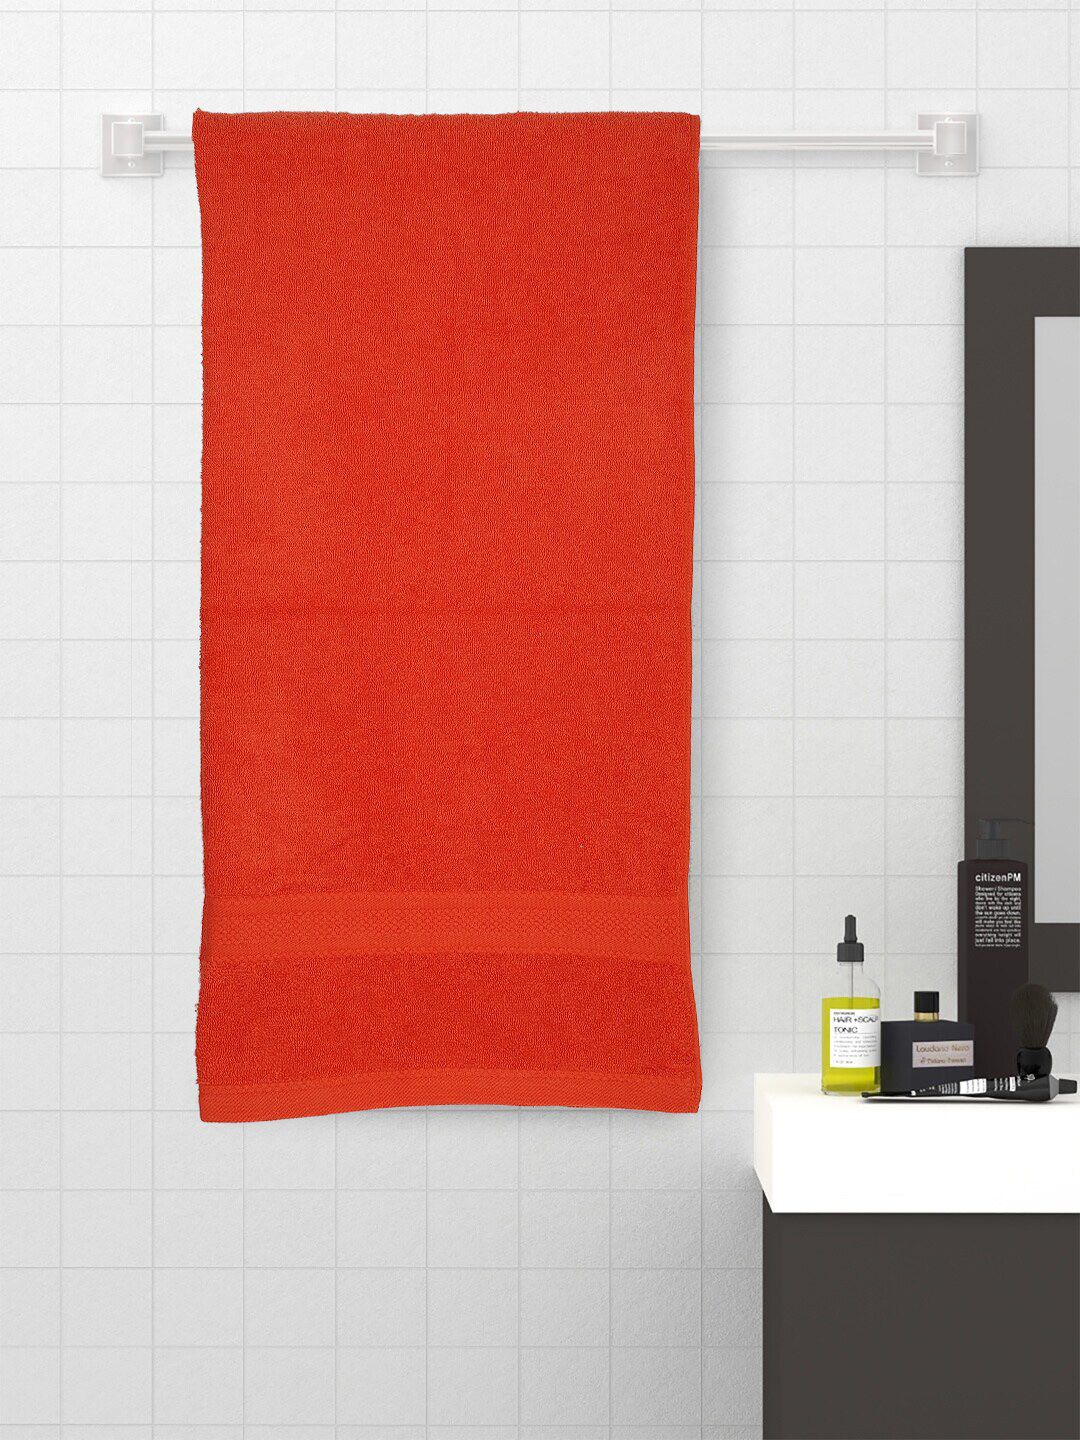 Raymond Home Orange Solid Cotton 450 GSM Bath Towel Price in India